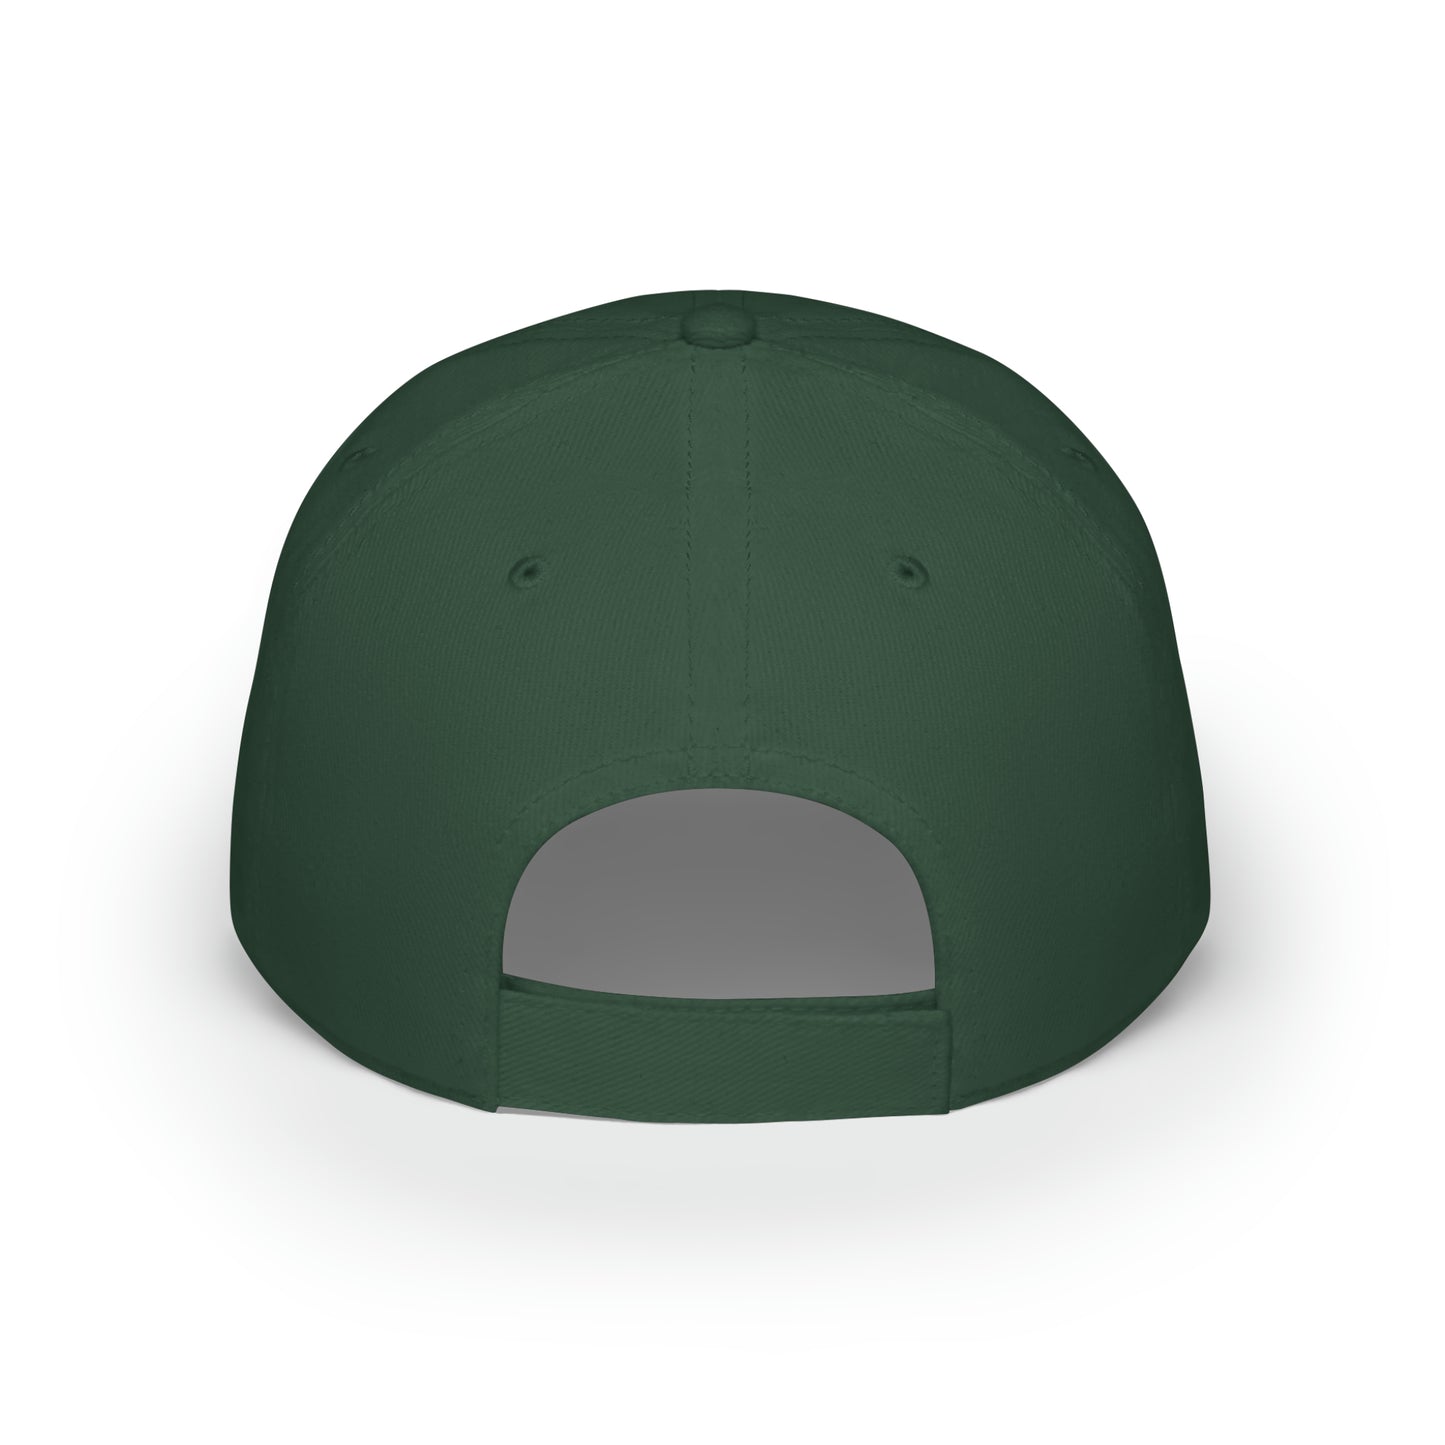 Lion Baseball Cap